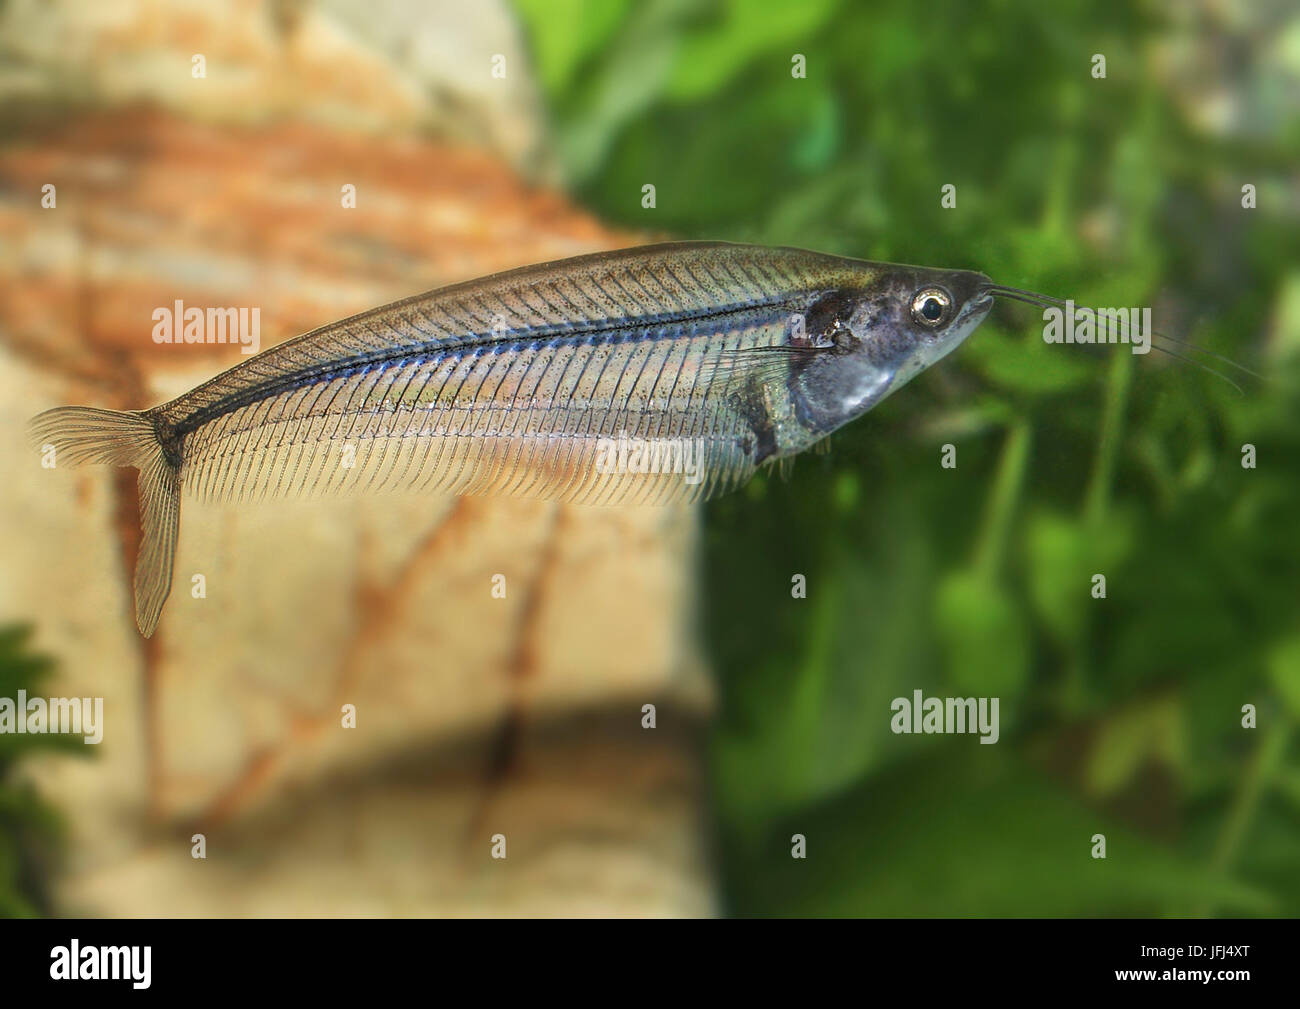 Wels aquarium hi-res stock photography and images - Alamy